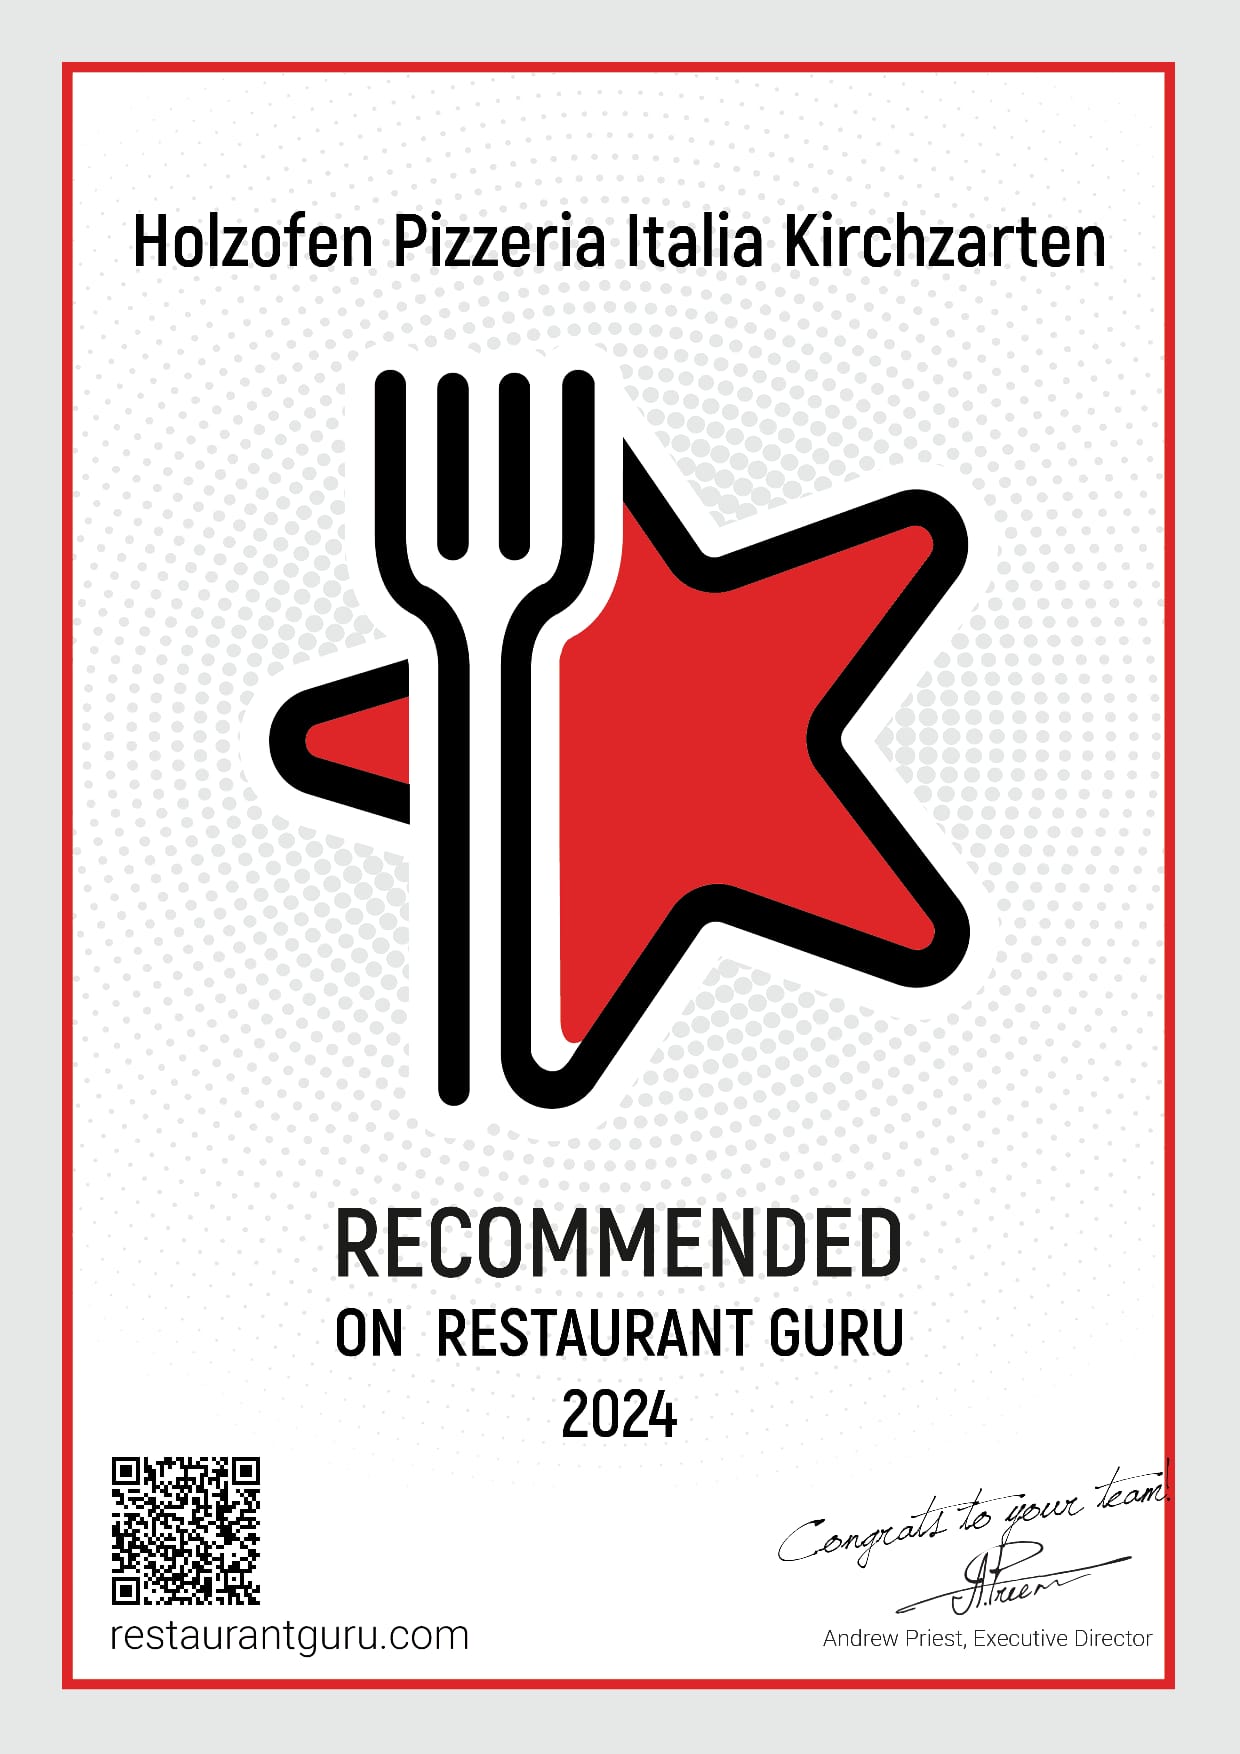 Pizzeria Italia 2024 vom Restaurant Guru empfohlen